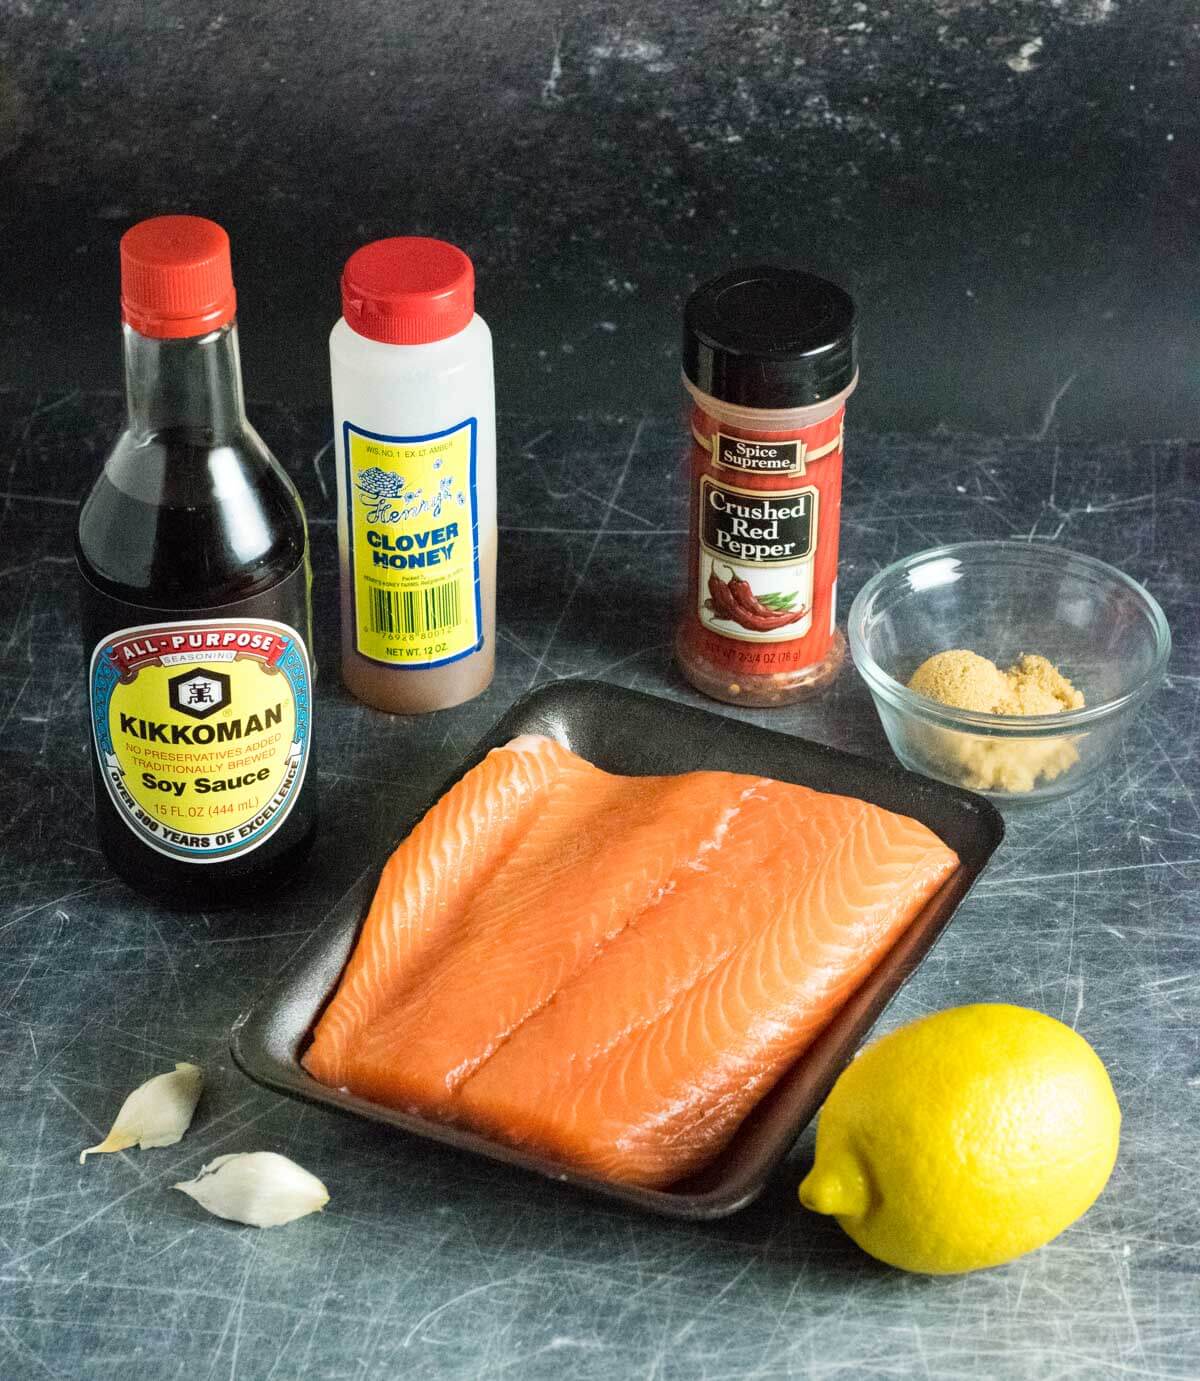 Showing ingredients for salmon bites.